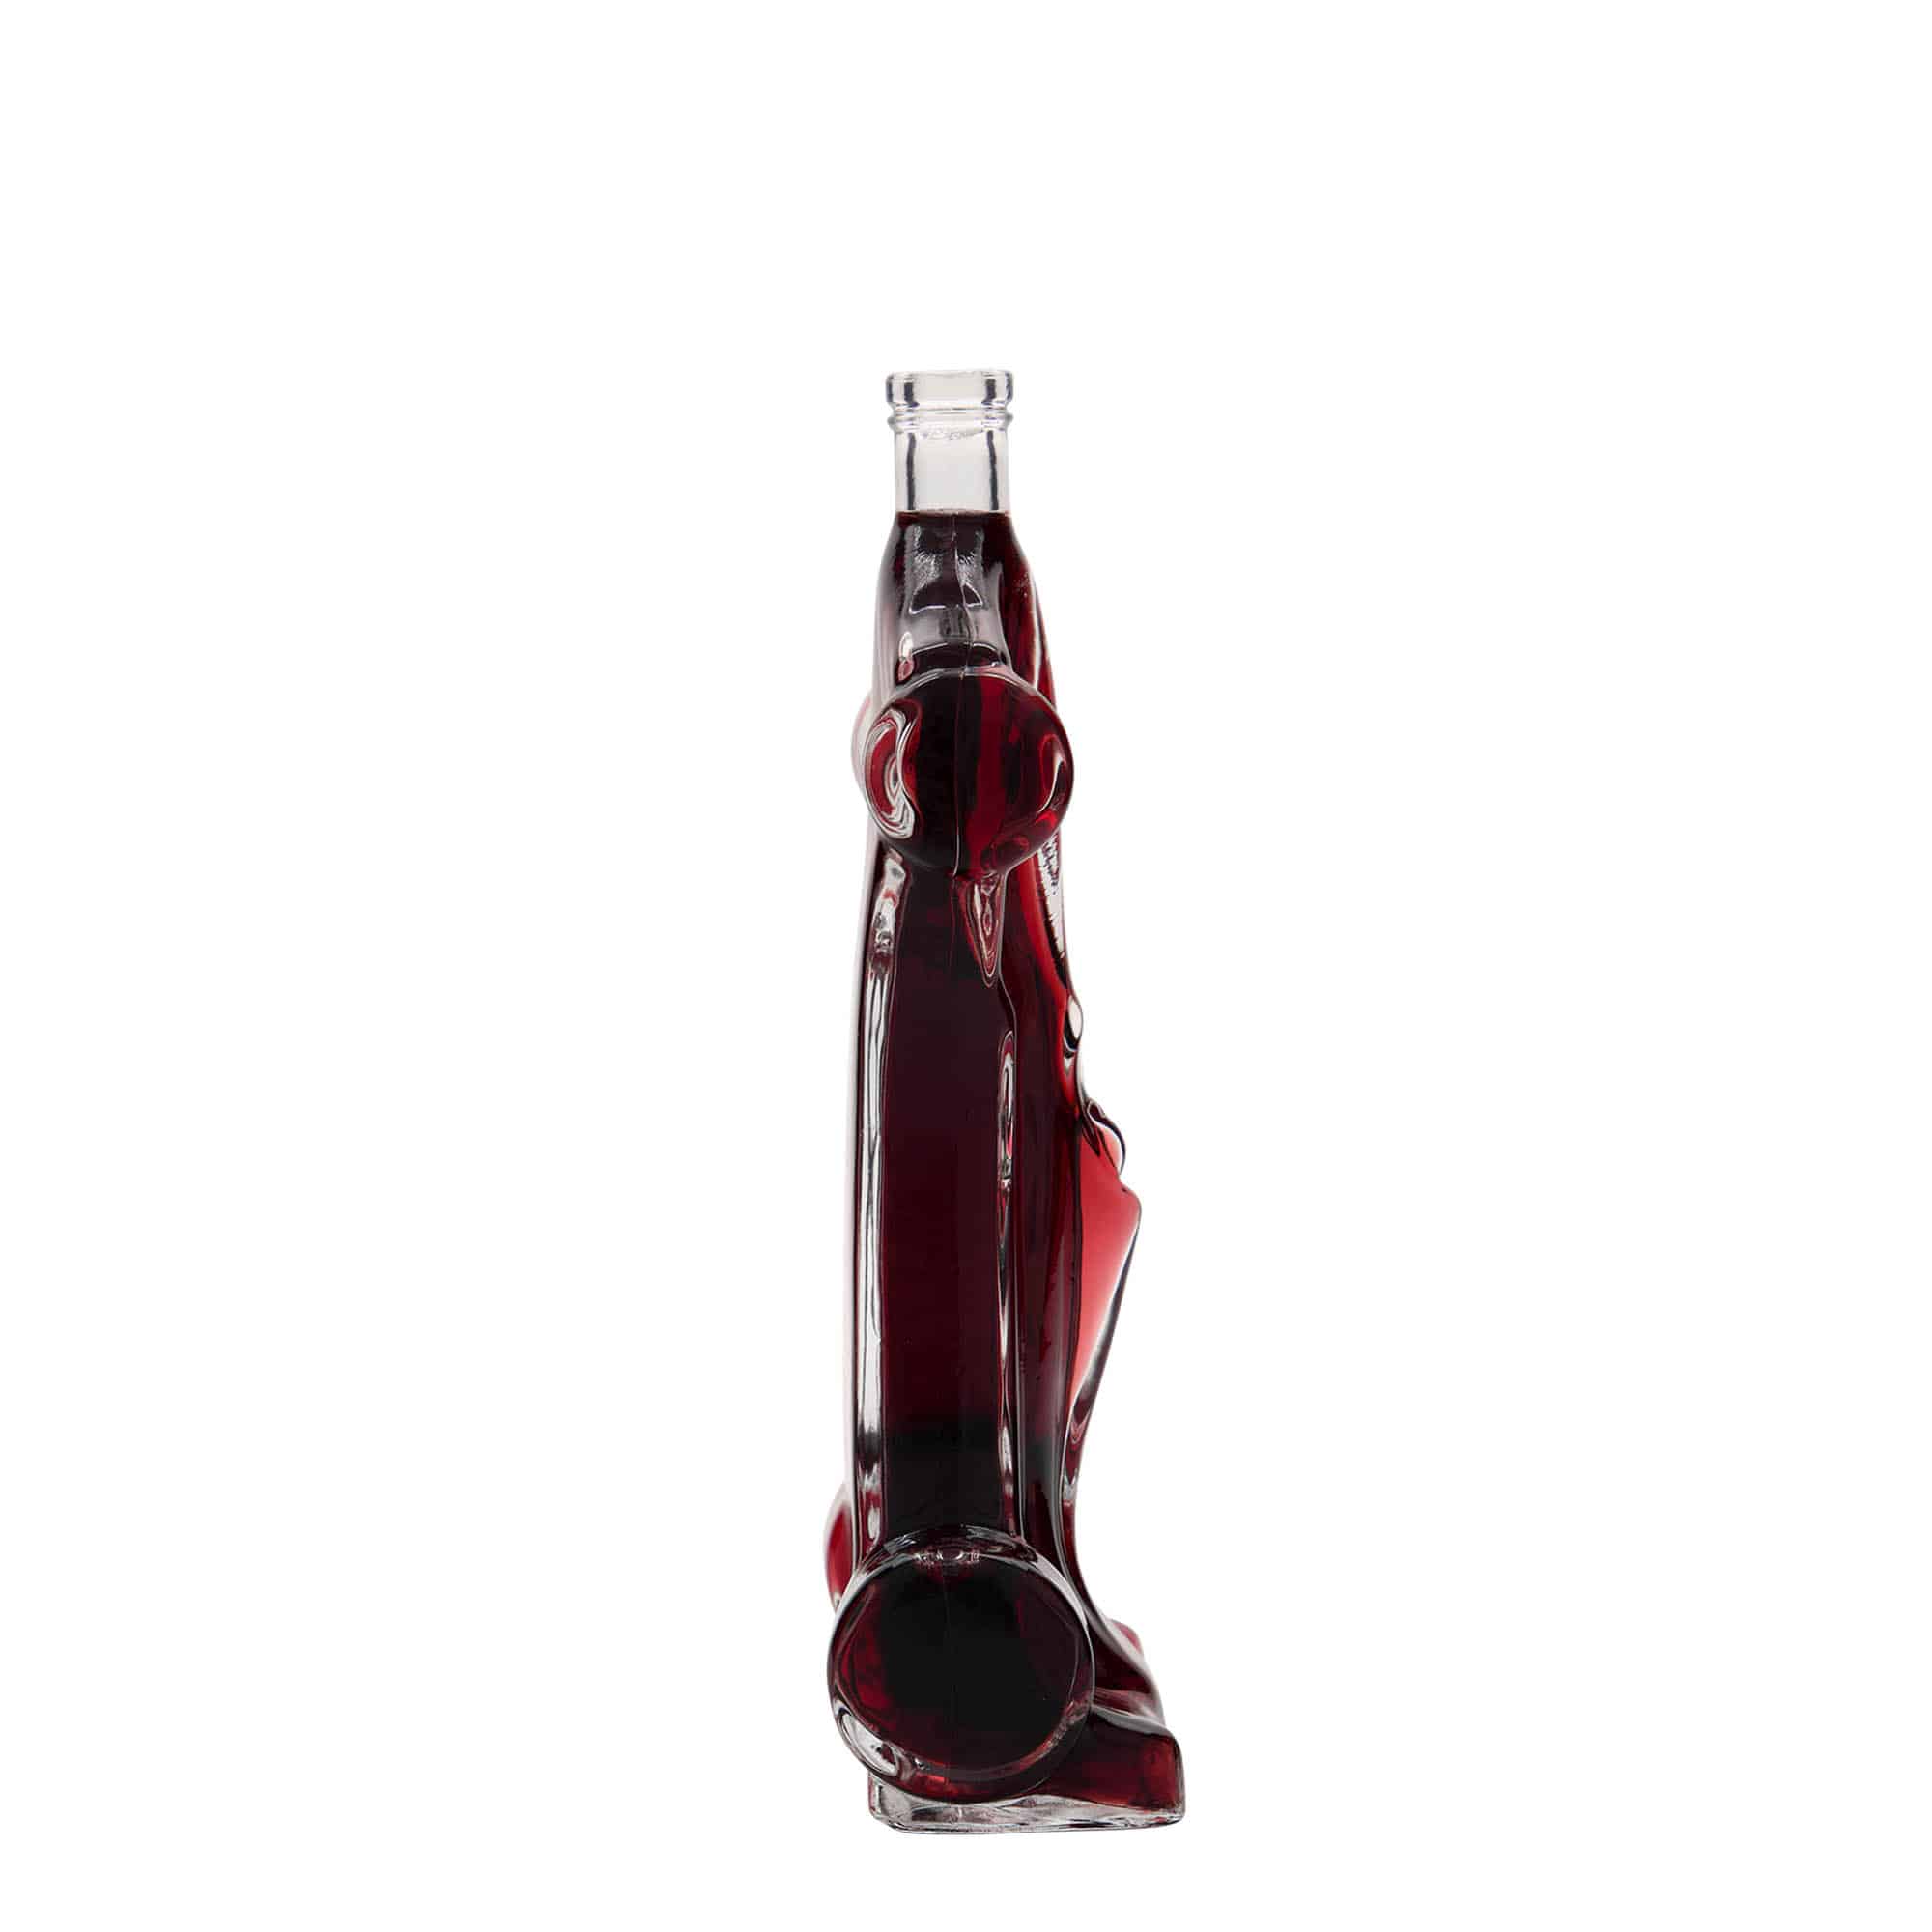 200 ml glass bottle 'Racecar', closure: cork